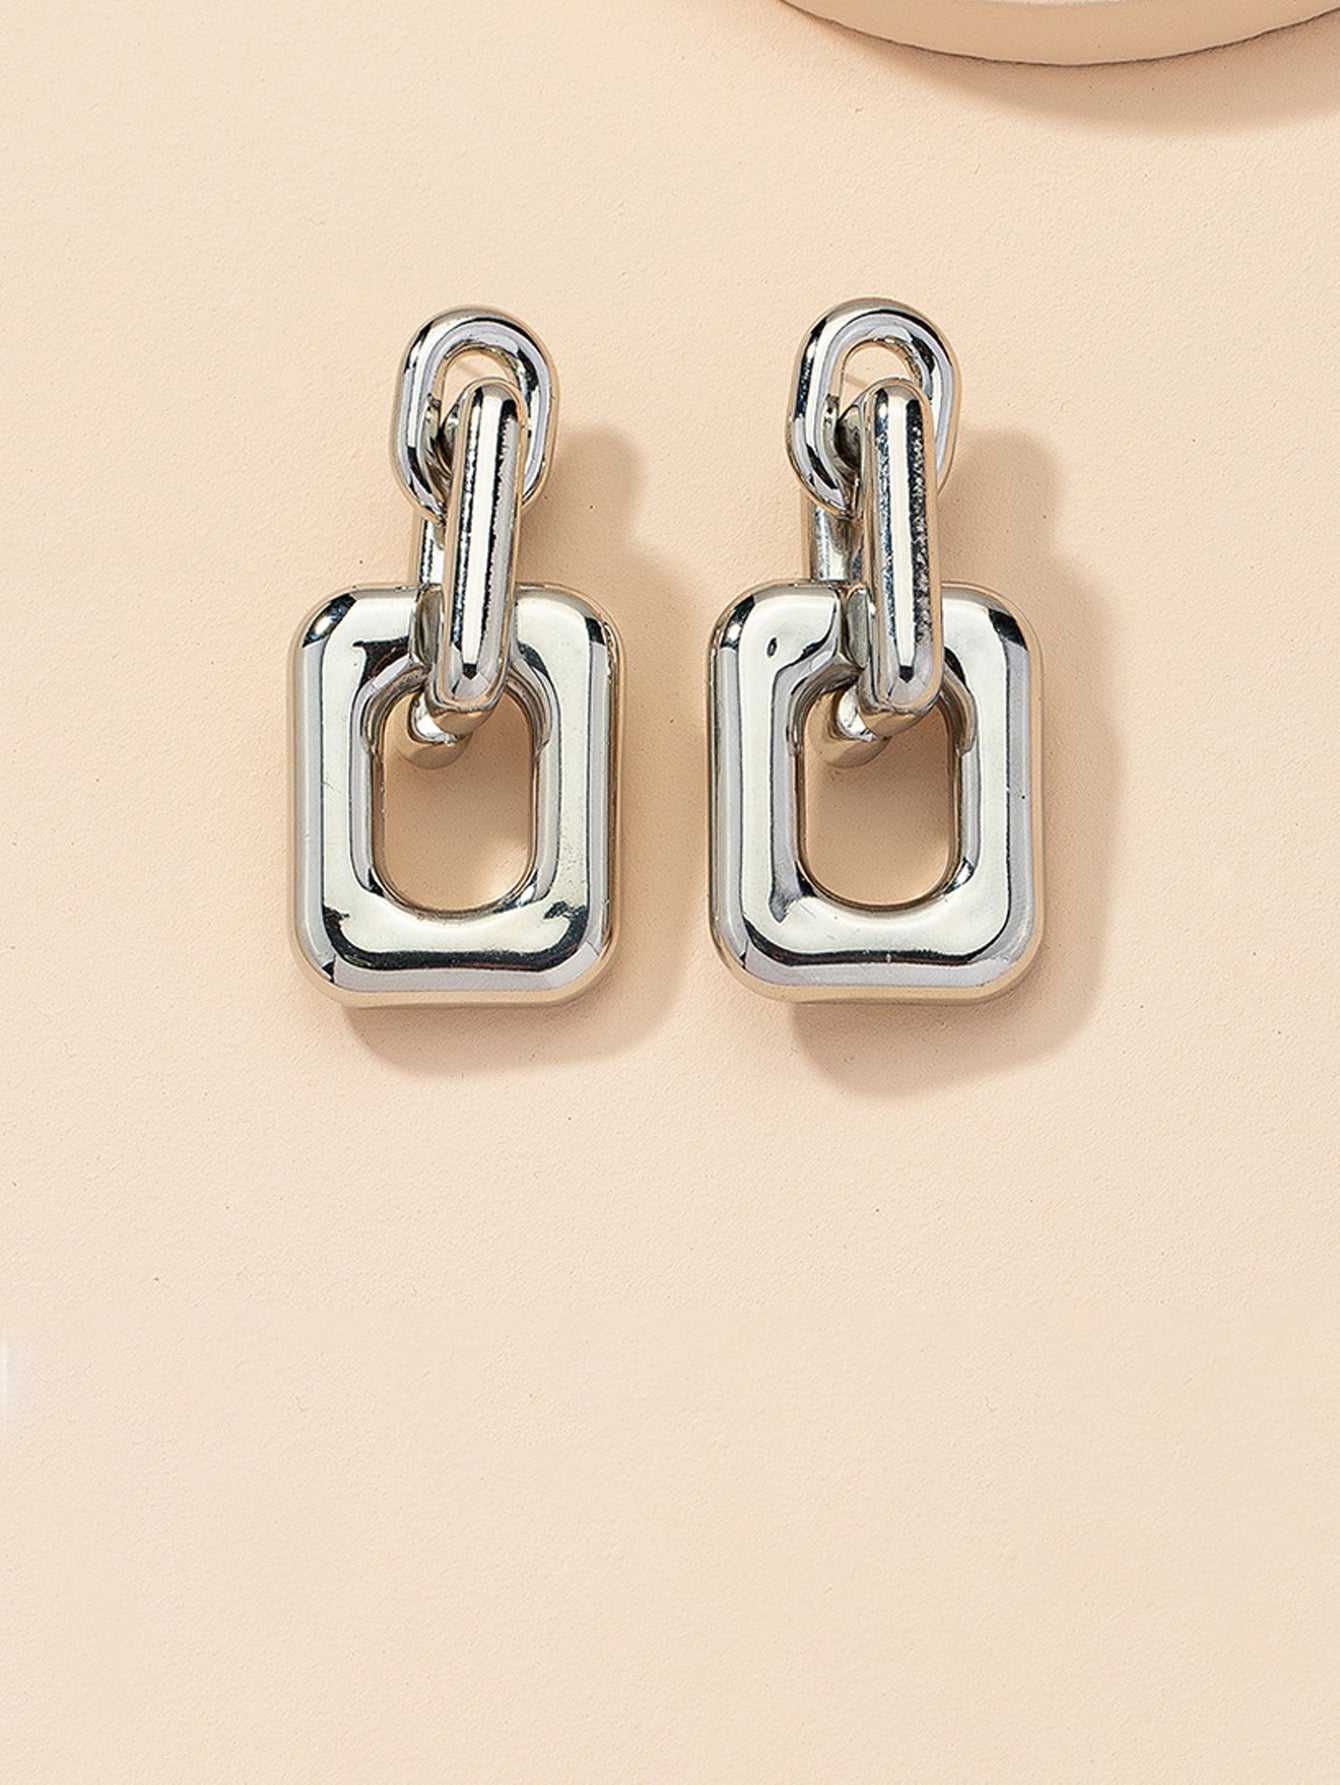 Geometric chain earrings - White Gold - FD ⚡